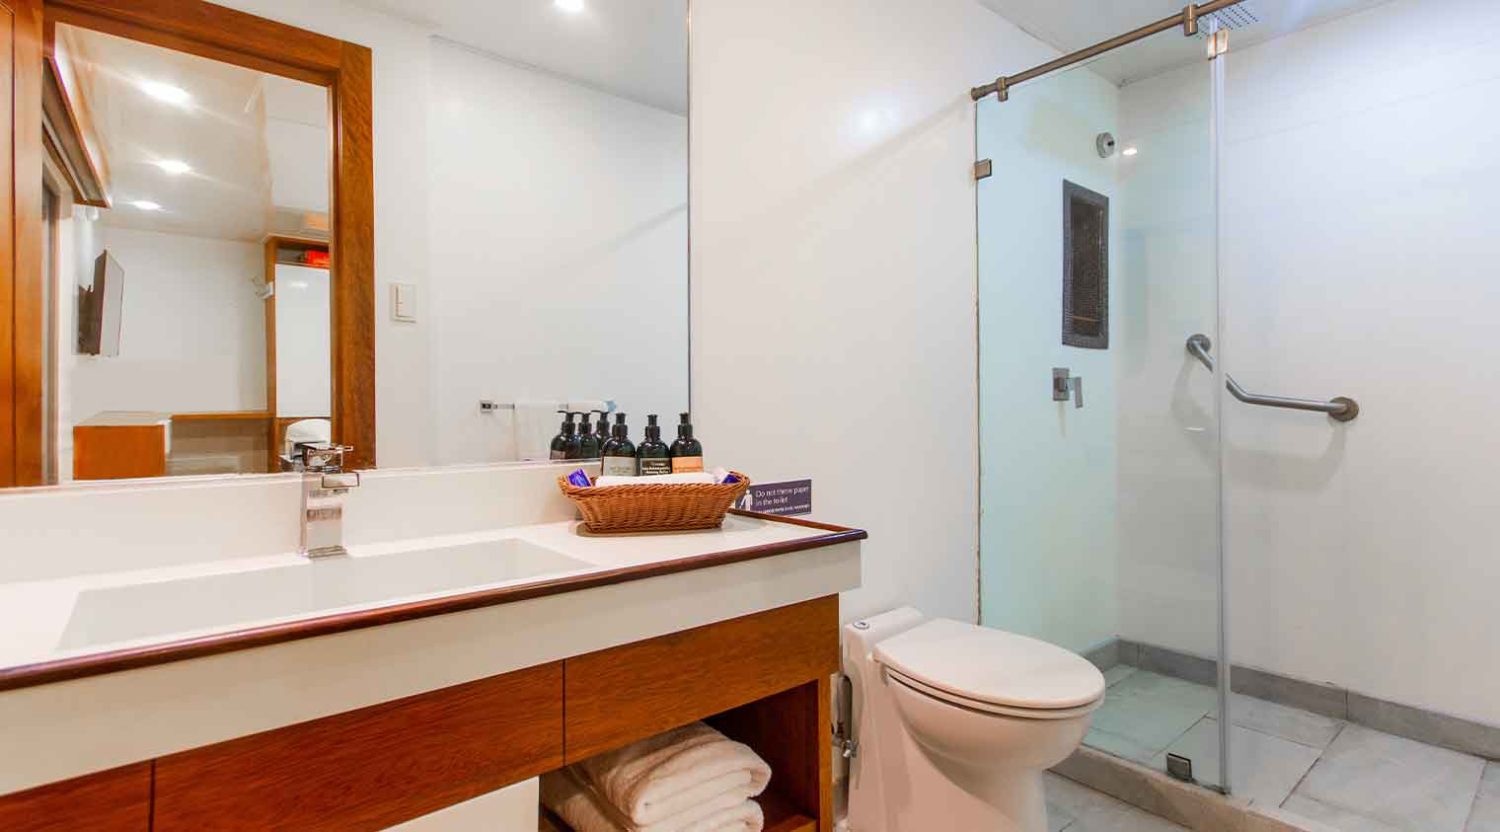 Infinity Yacht bathroom of galapagos islands tours